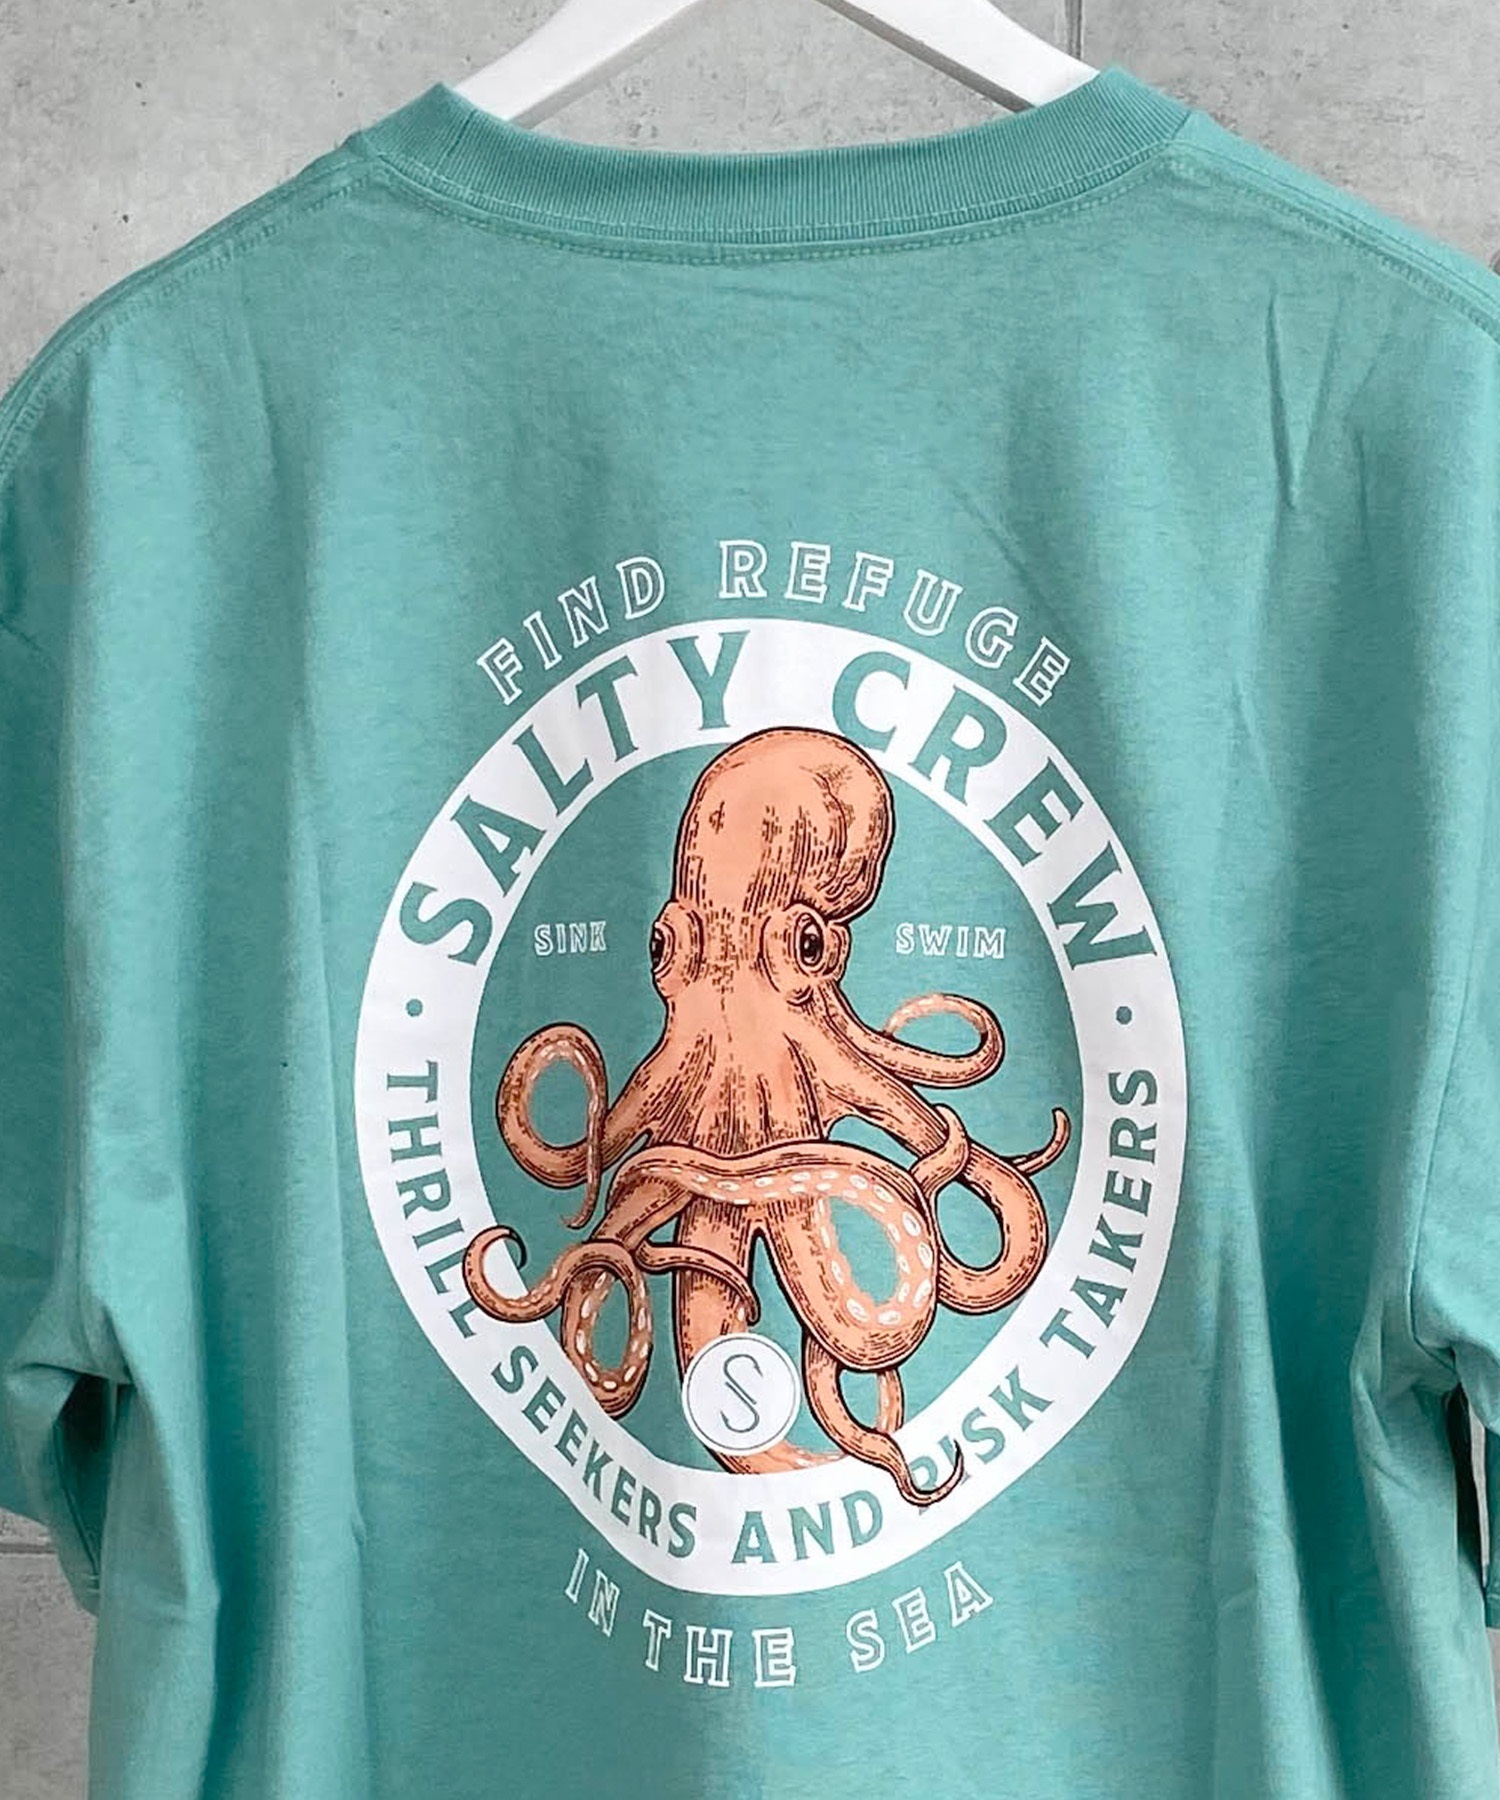 SALTY CREW ソルティークルー メンズ Tシャツ 半袖 バックプリント オーバーサイズ JAPAN LTD 54-233(CHA-M)